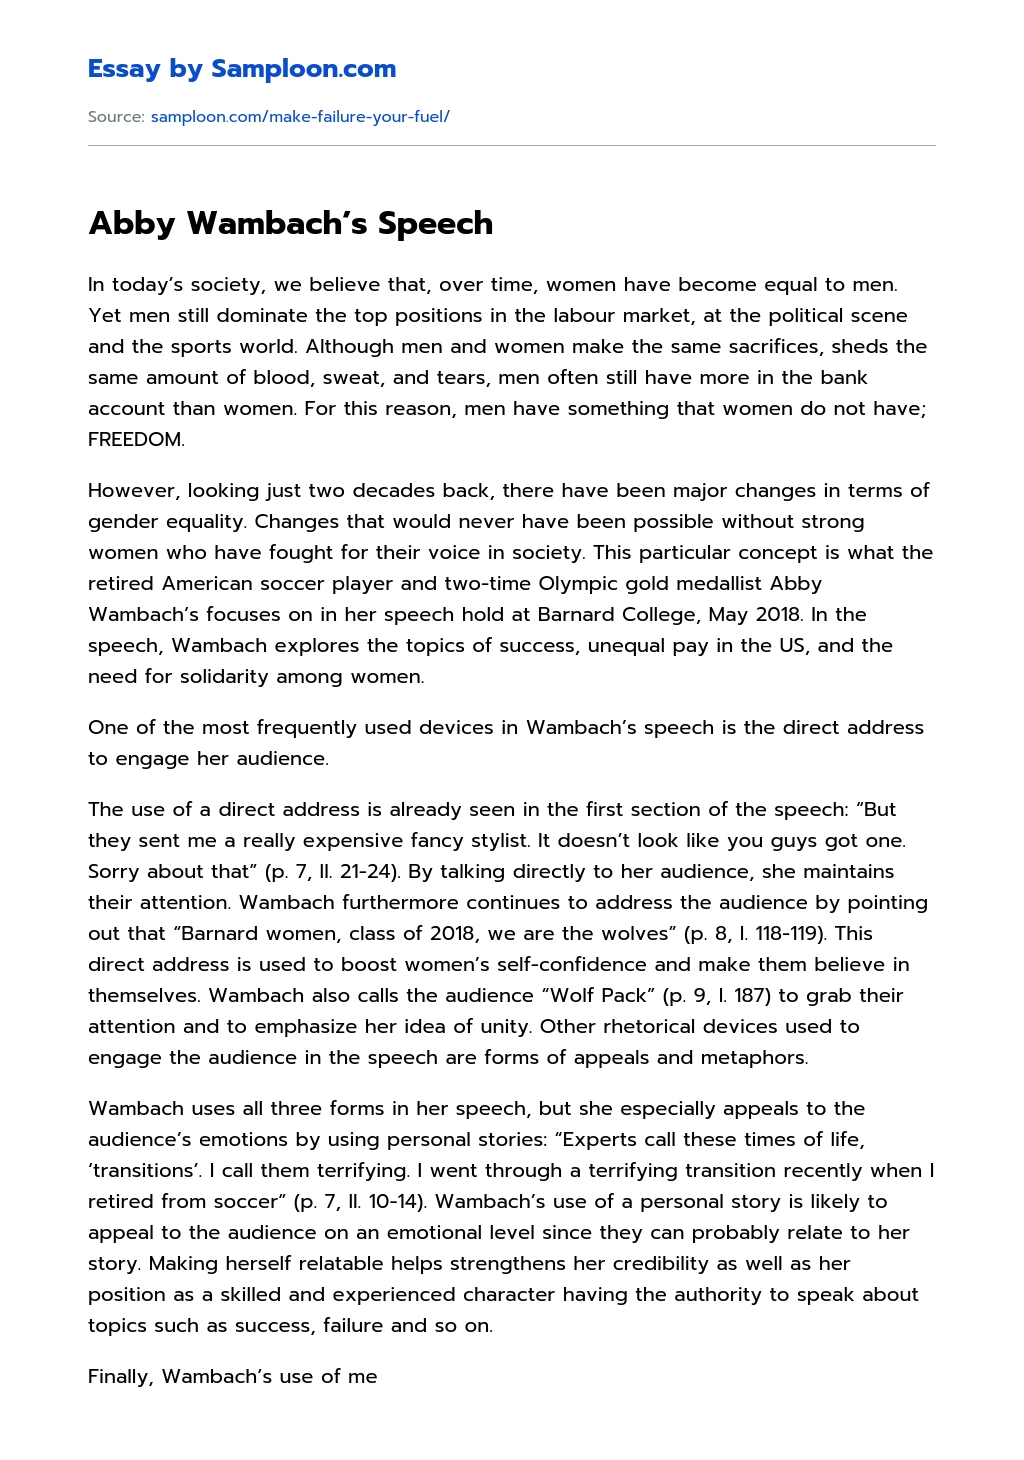 Abby Wambach’s Speech Analytical Essay essay